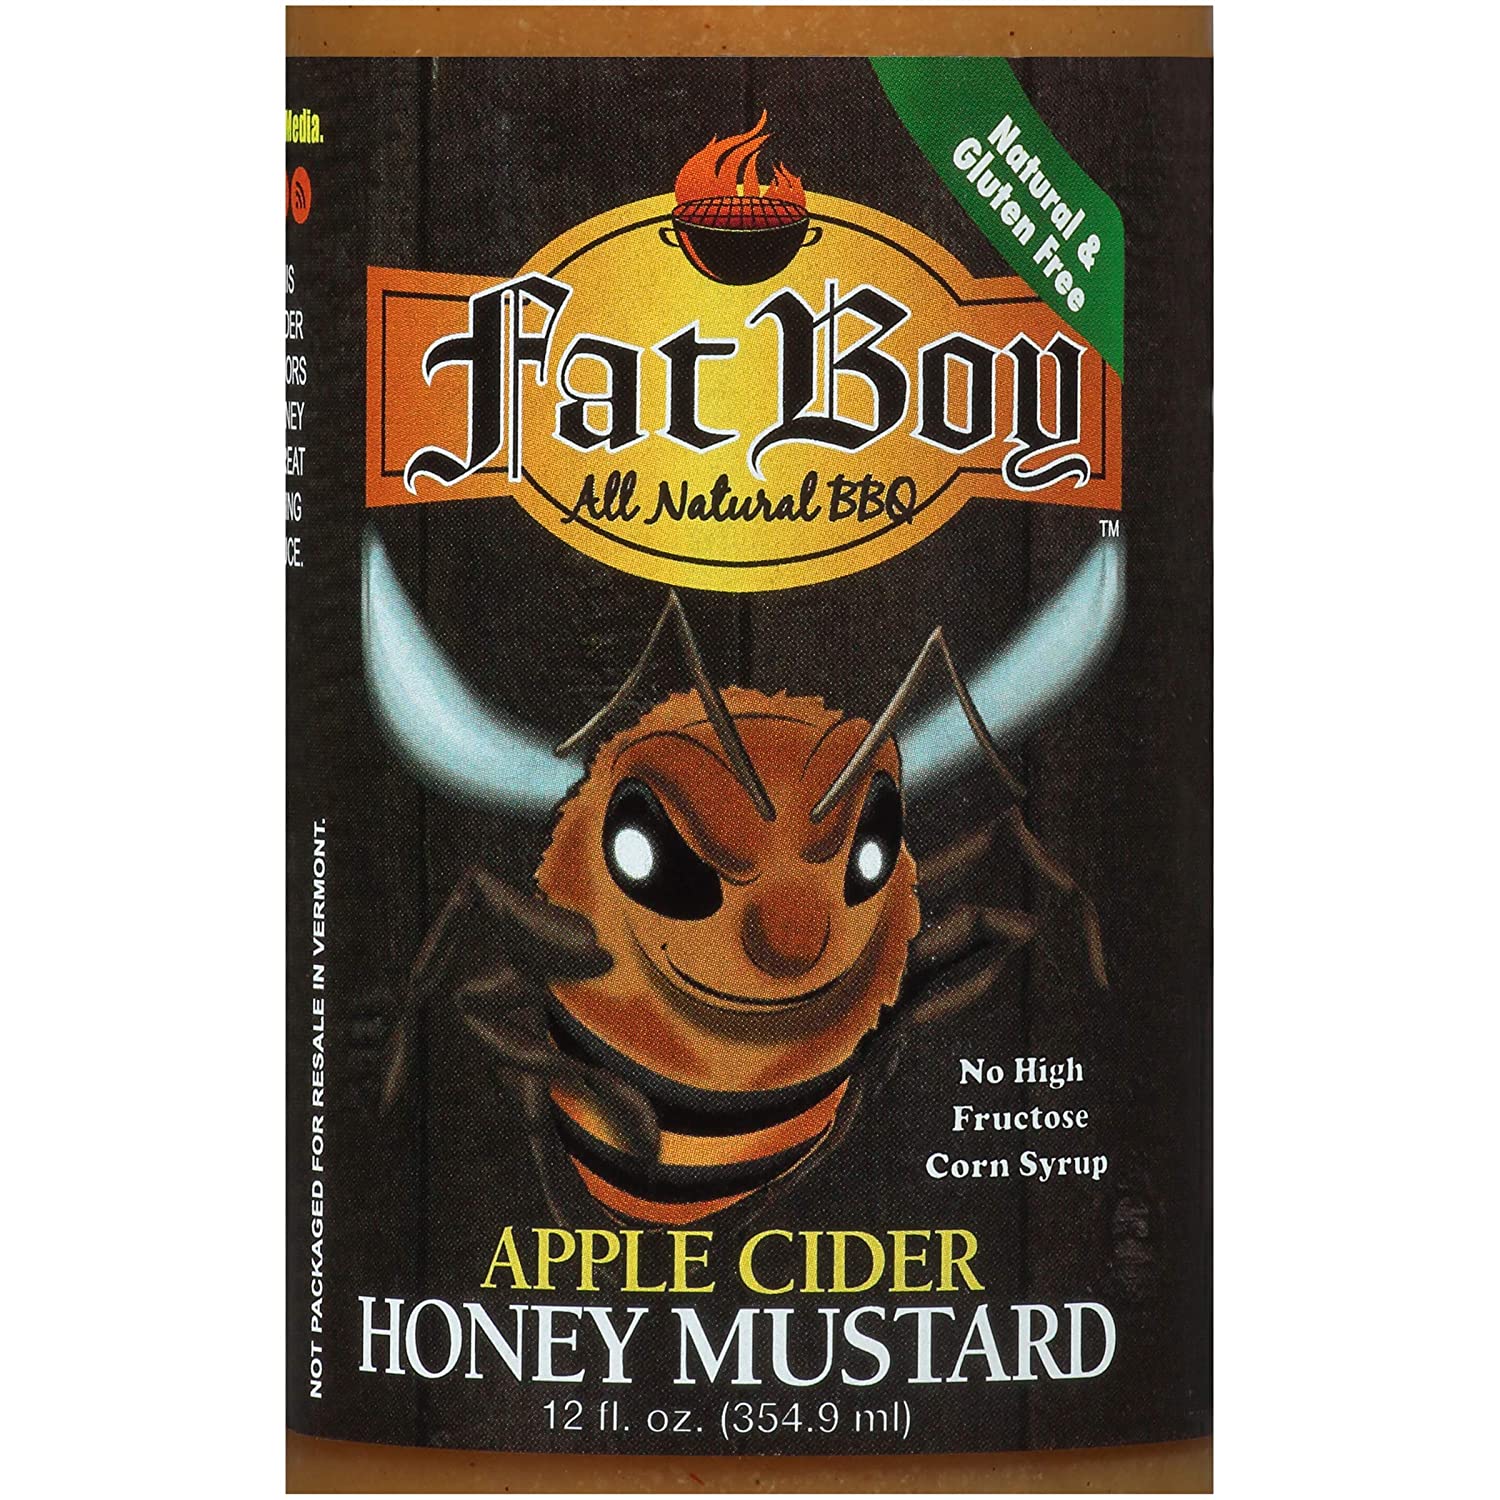 Fat Boy All Natural BBQ Apple Cider Honey Mustard Spicy Habanero 12 oz Bottle